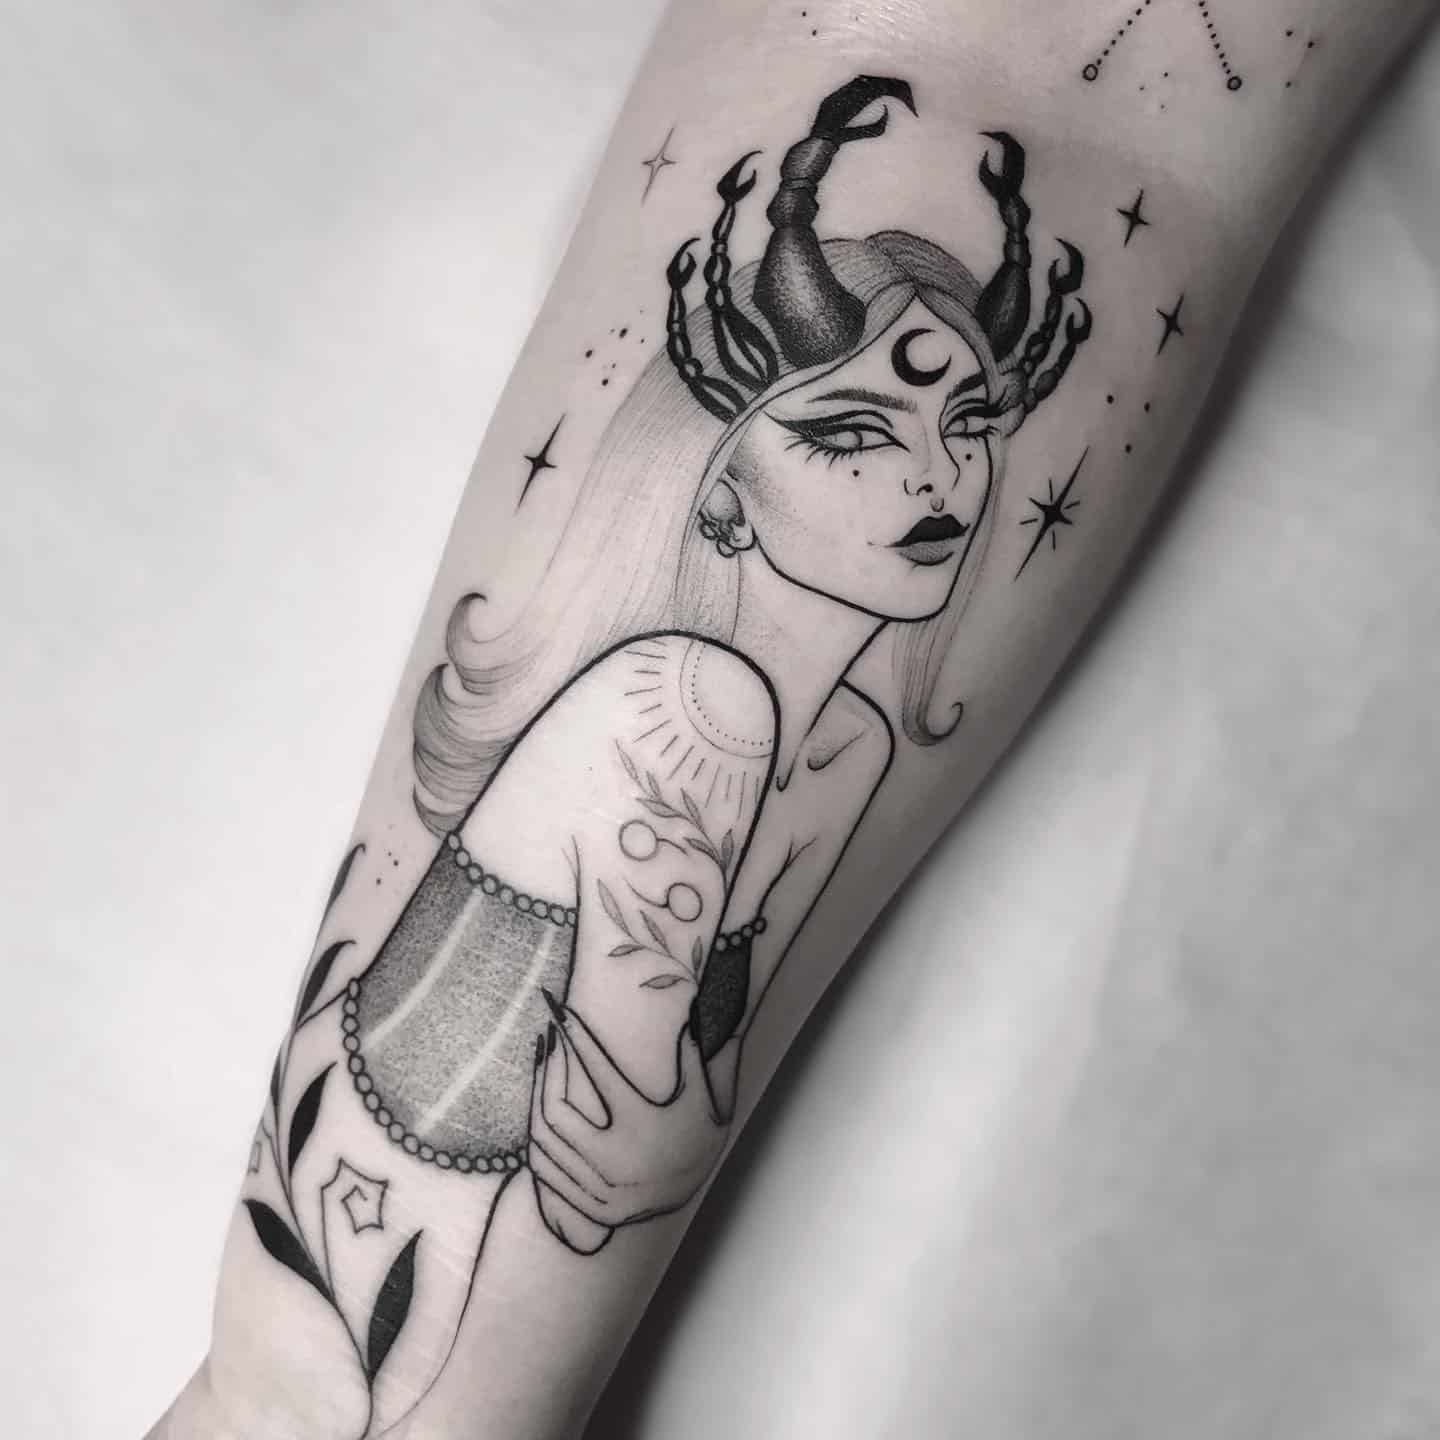 Zodiac sign tattoos ideas ! ✨ | Gallery posted by xo.ideas 🜼 | Lemon8